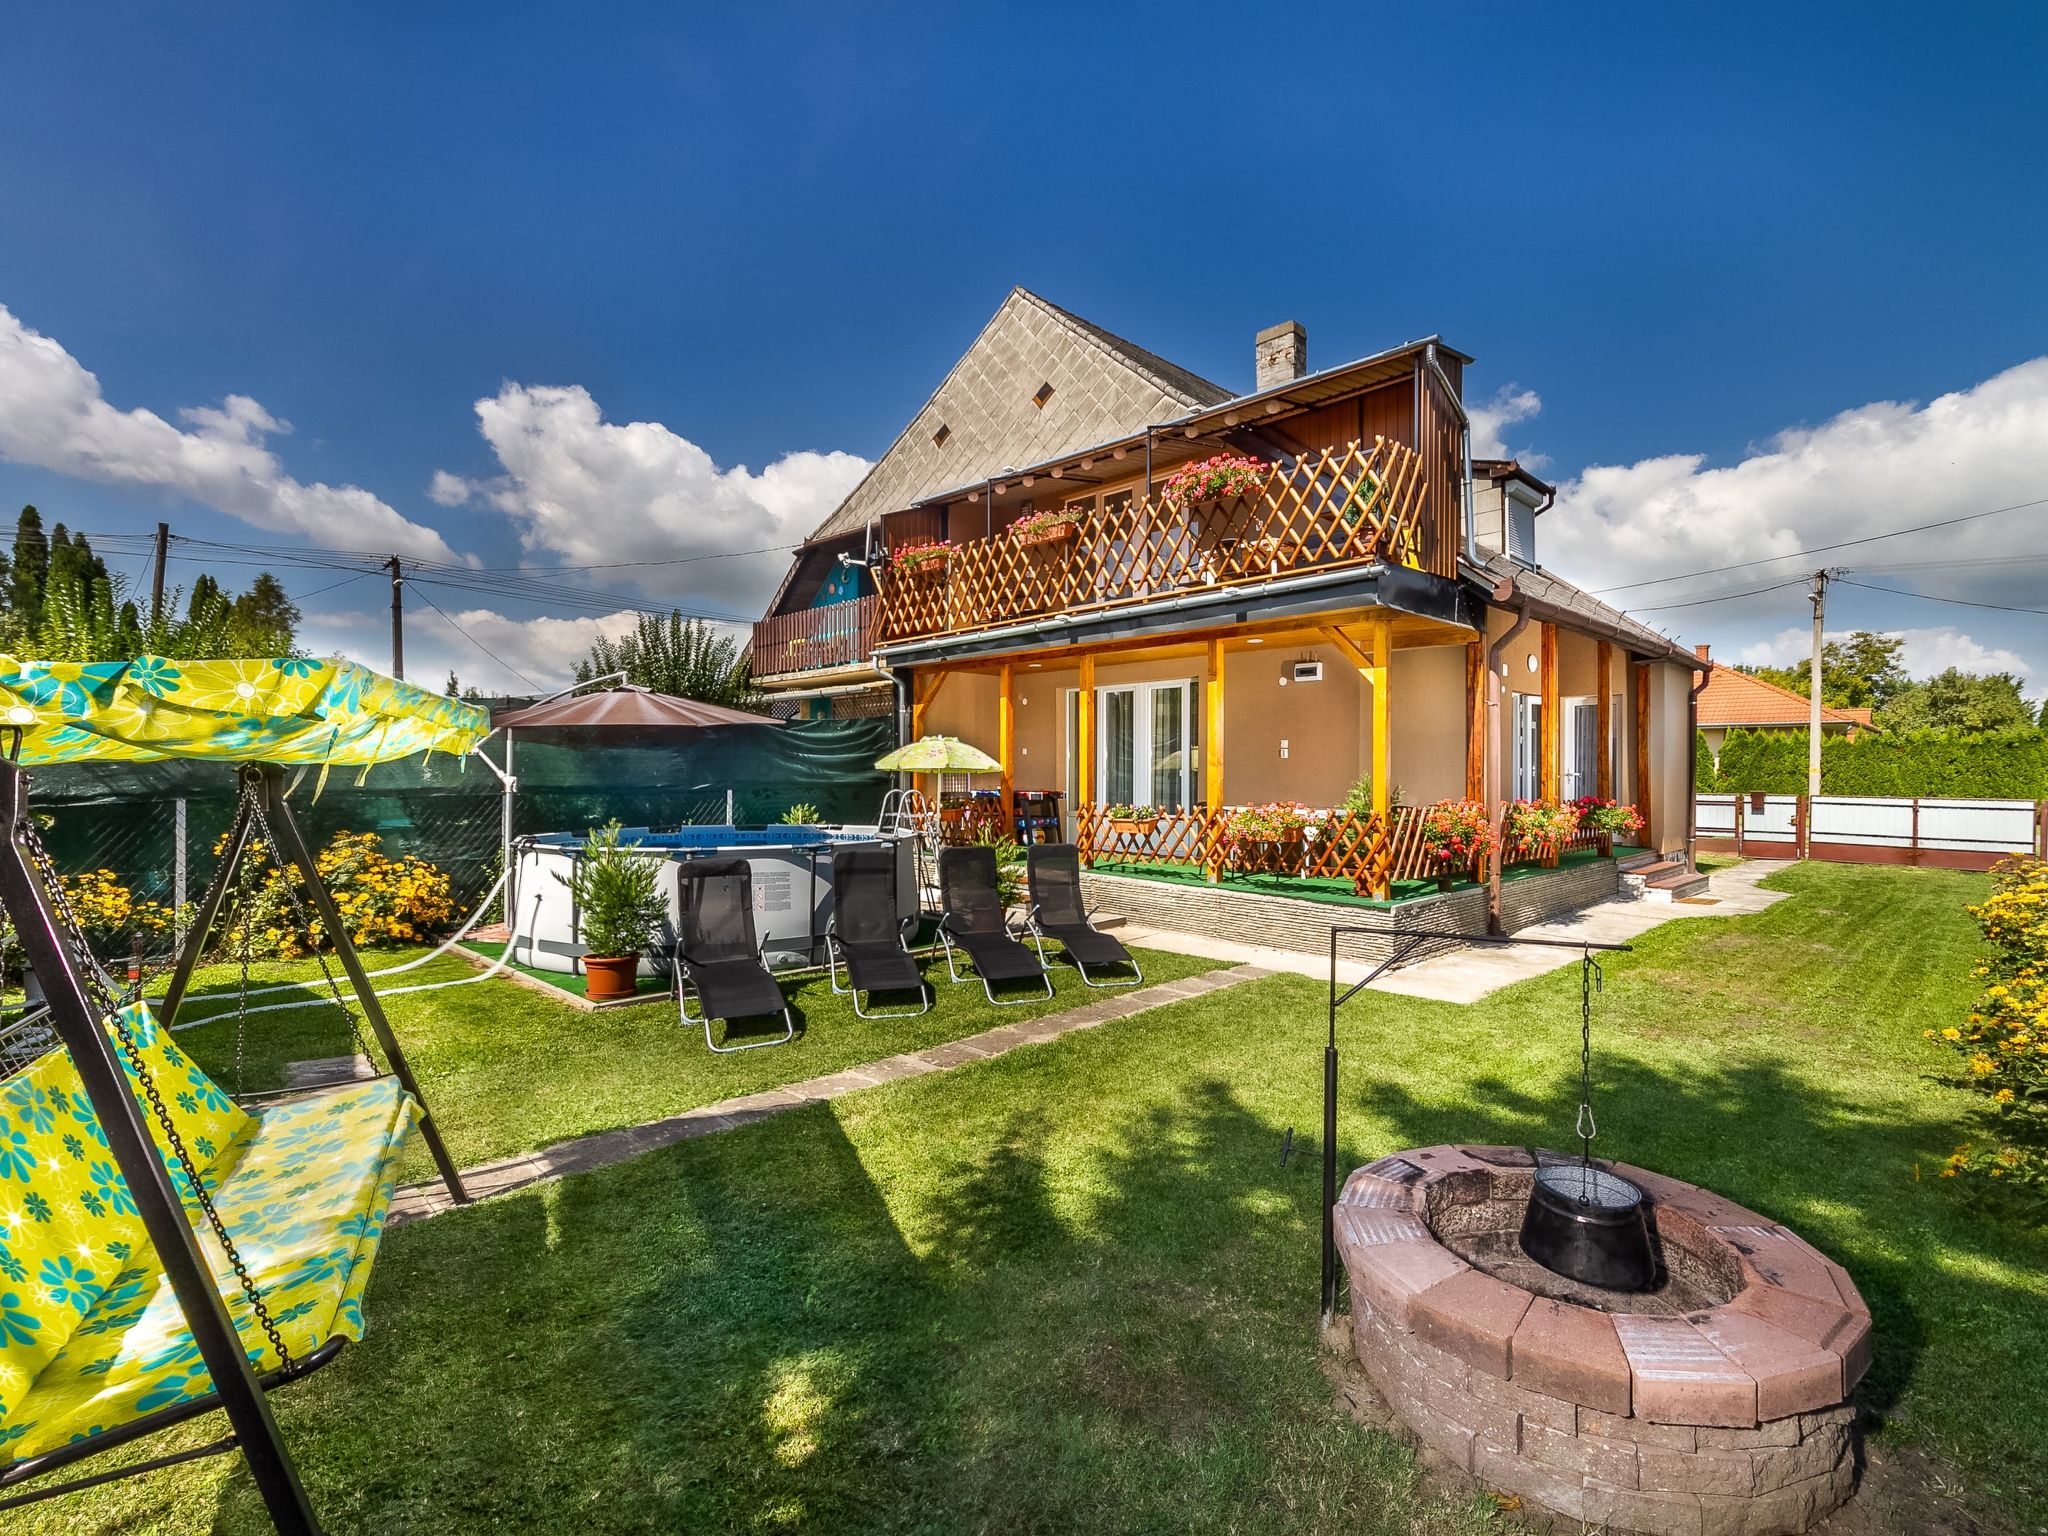 Foto 2 - Casa con 4 camere da letto a Balatonkeresztúr con piscina privata e giardino